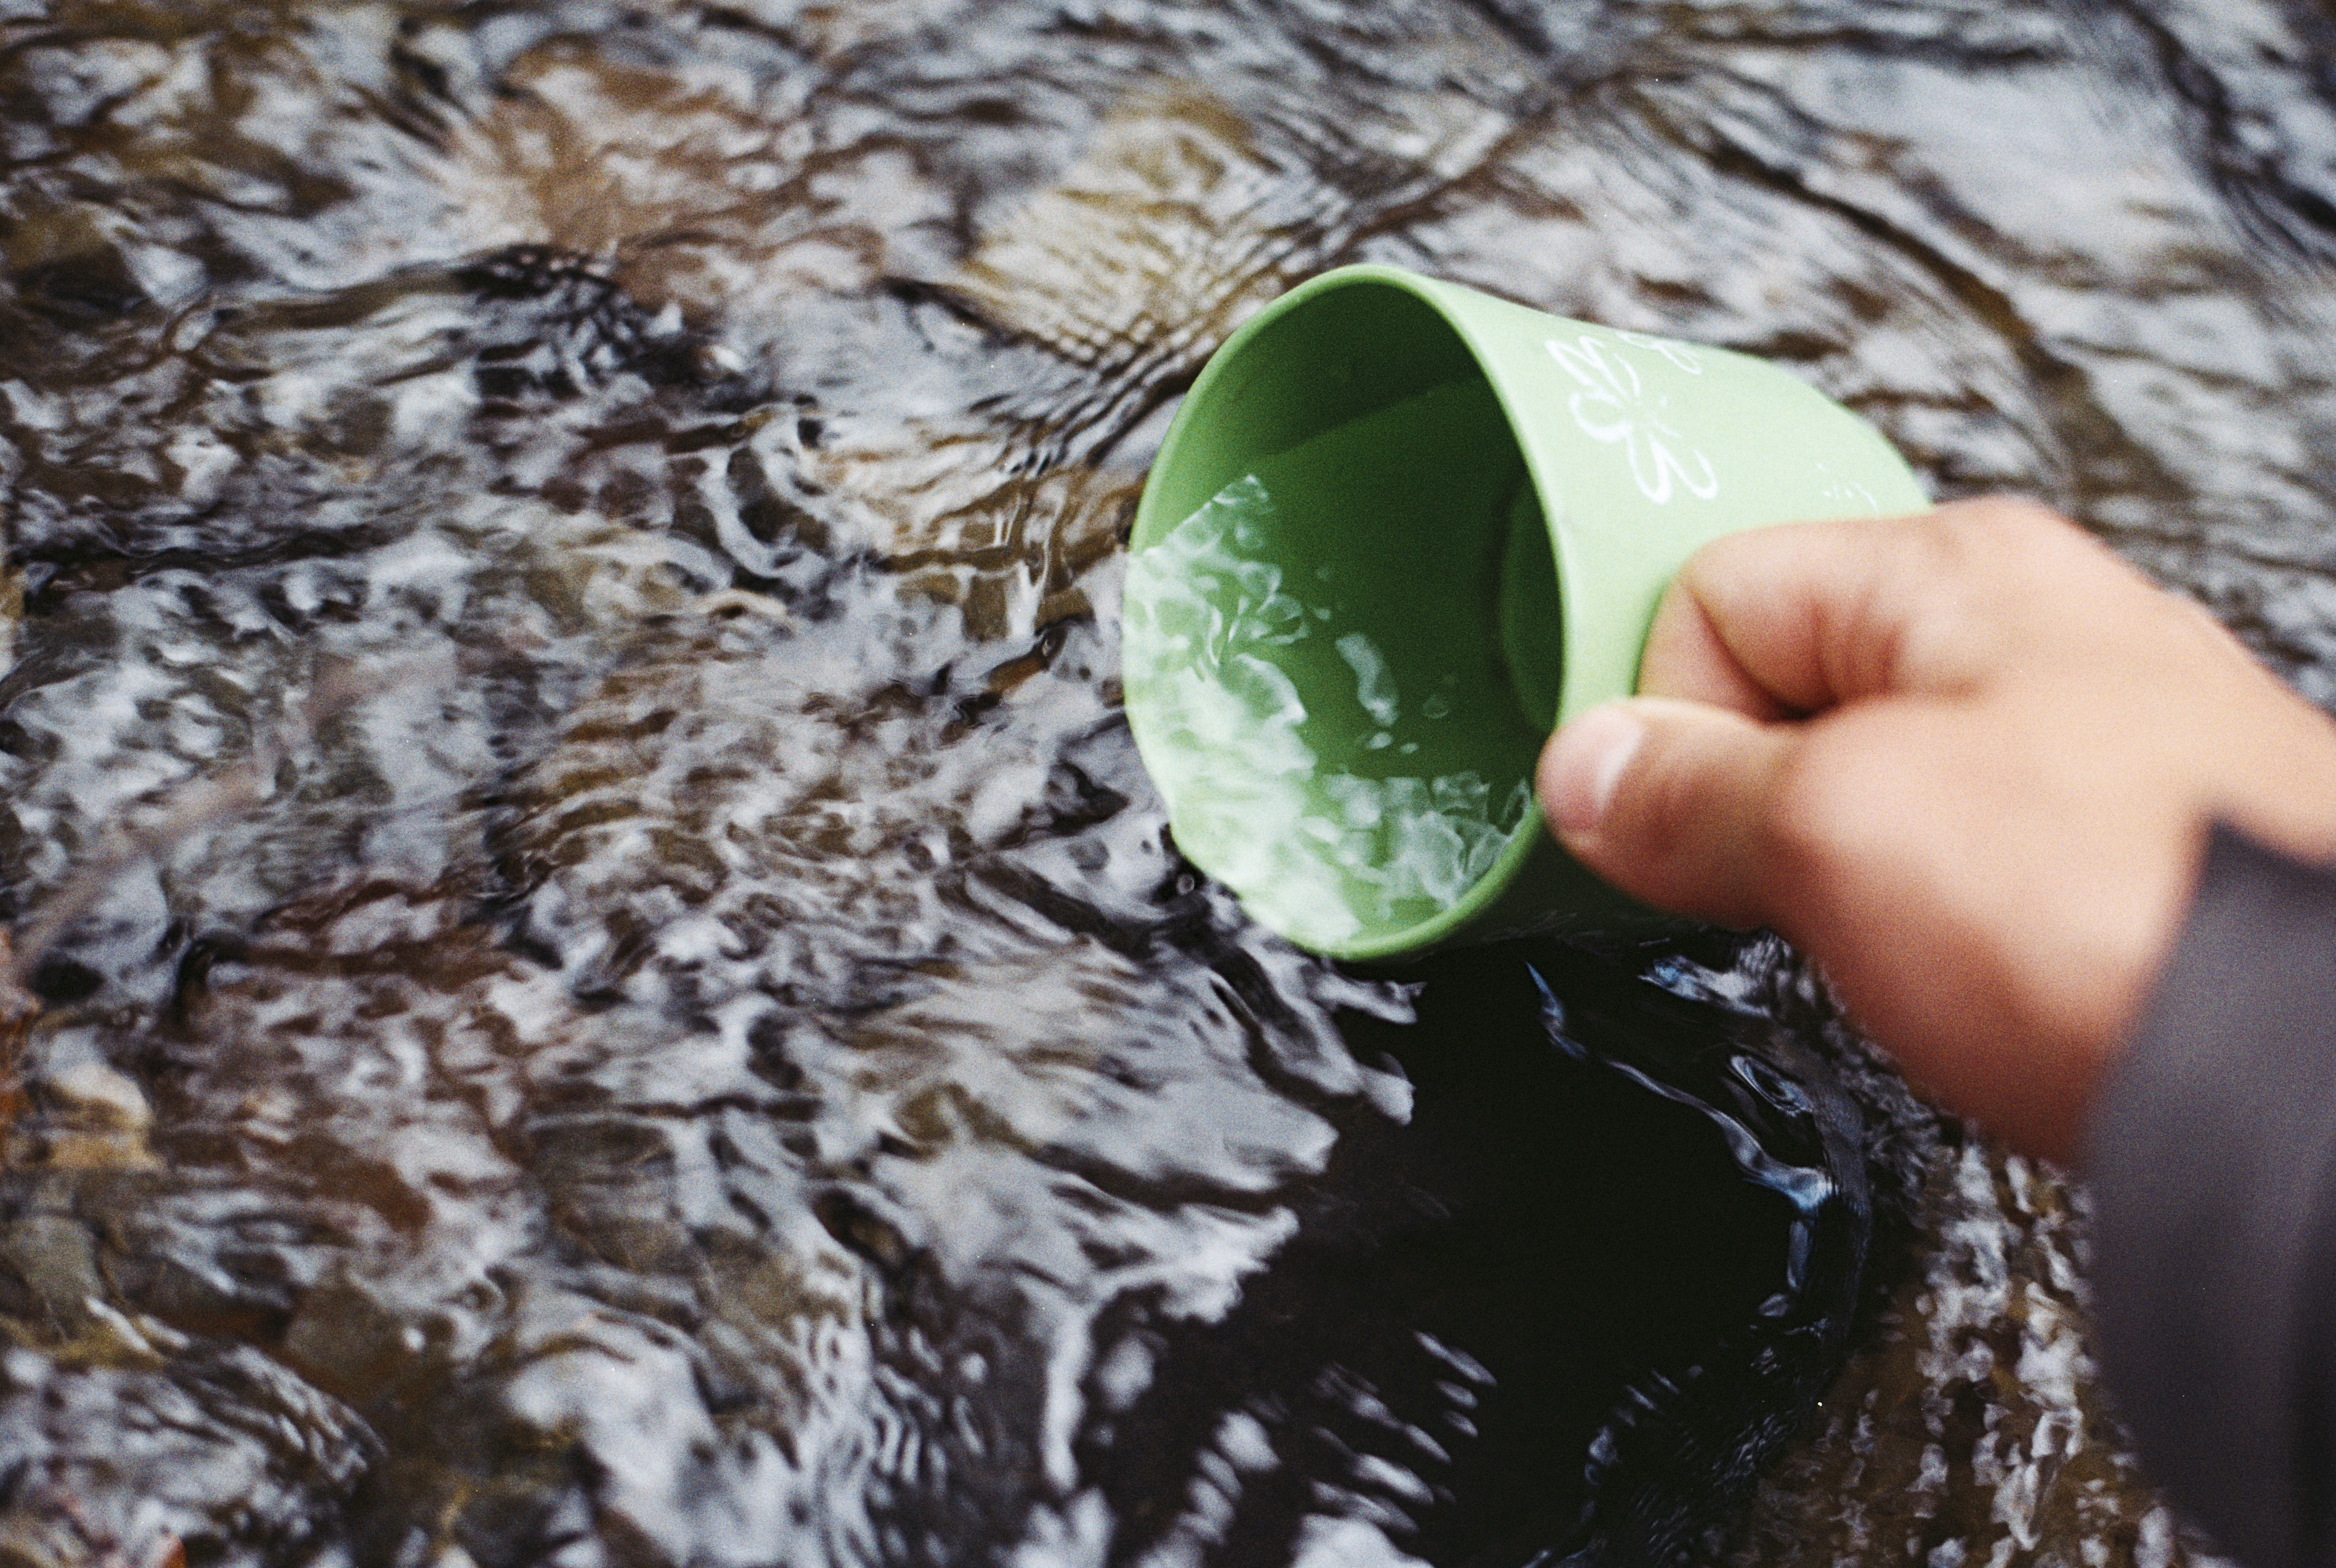 The Flint Water Crisis